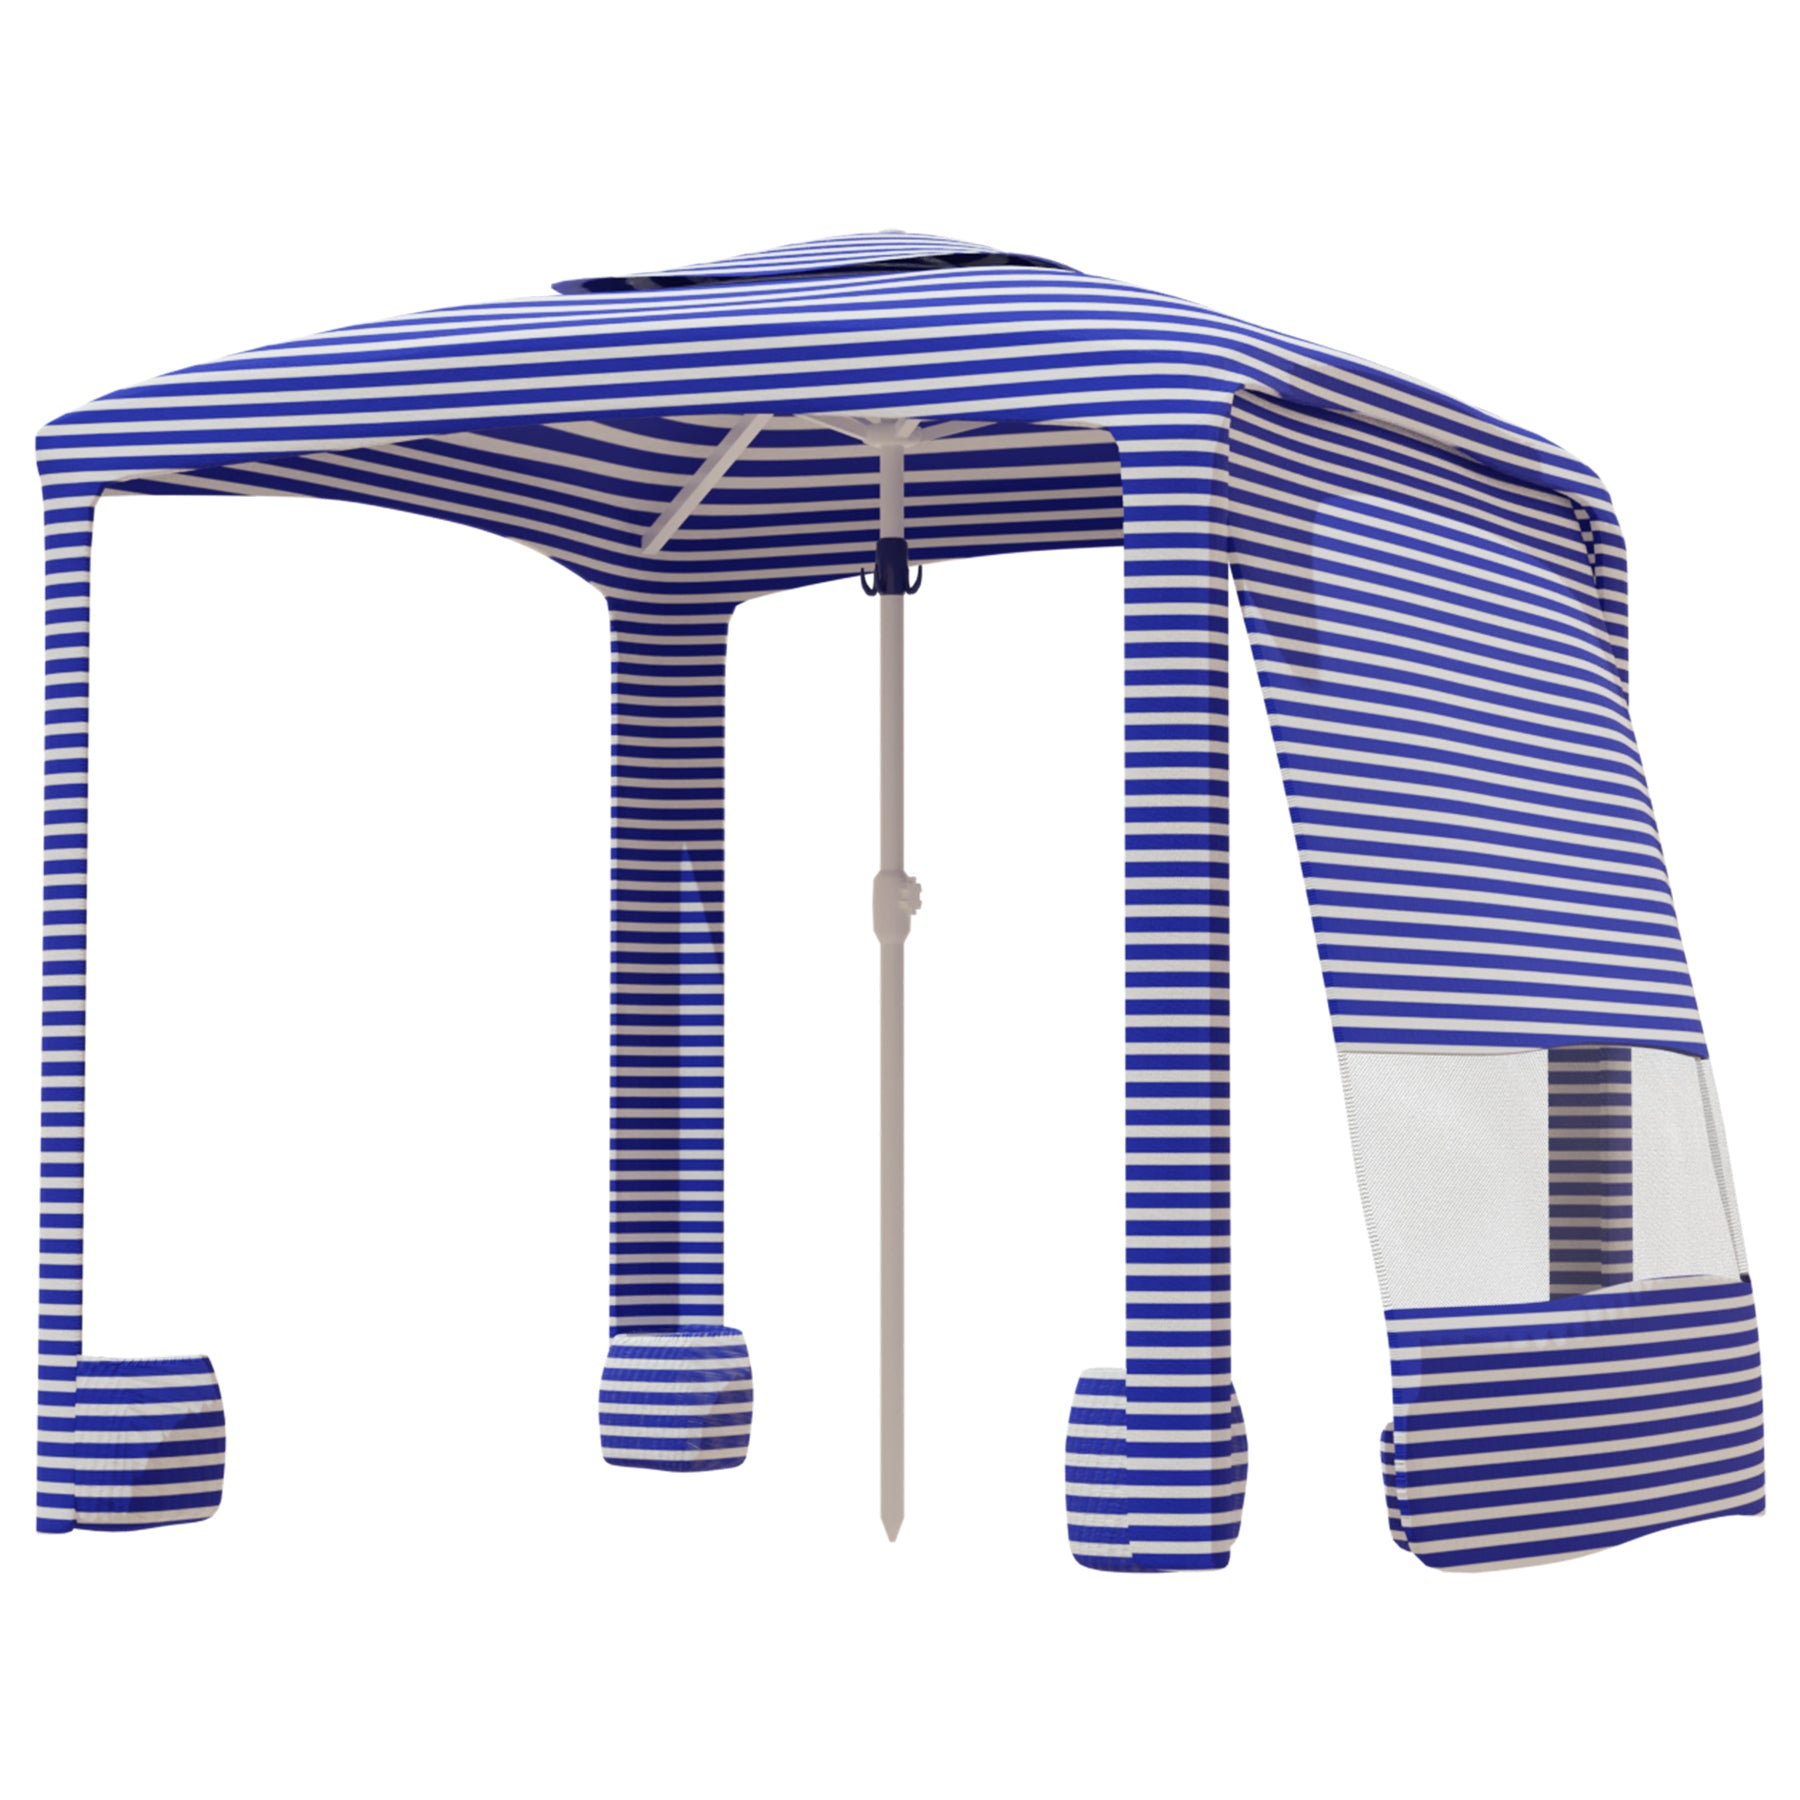 AMMSUN 6.2'×6.2' Beach Cabana With Privacy Sunwall Siesta Stripe